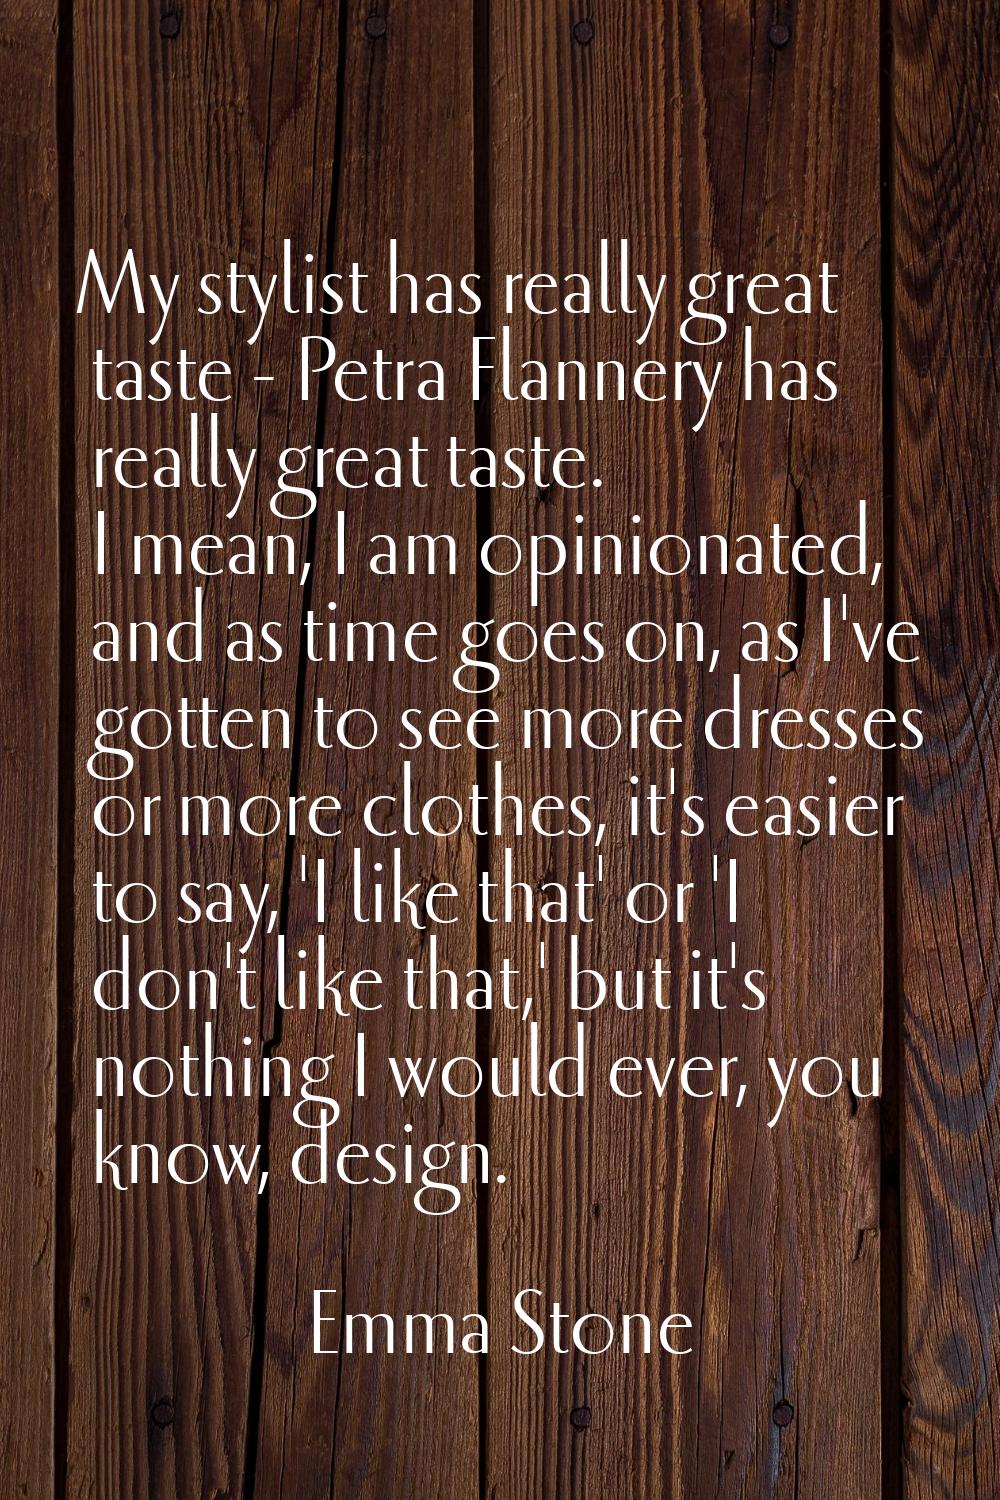 My stylist has really great taste - Petra Flannery has really great taste. I mean, I am opinionated